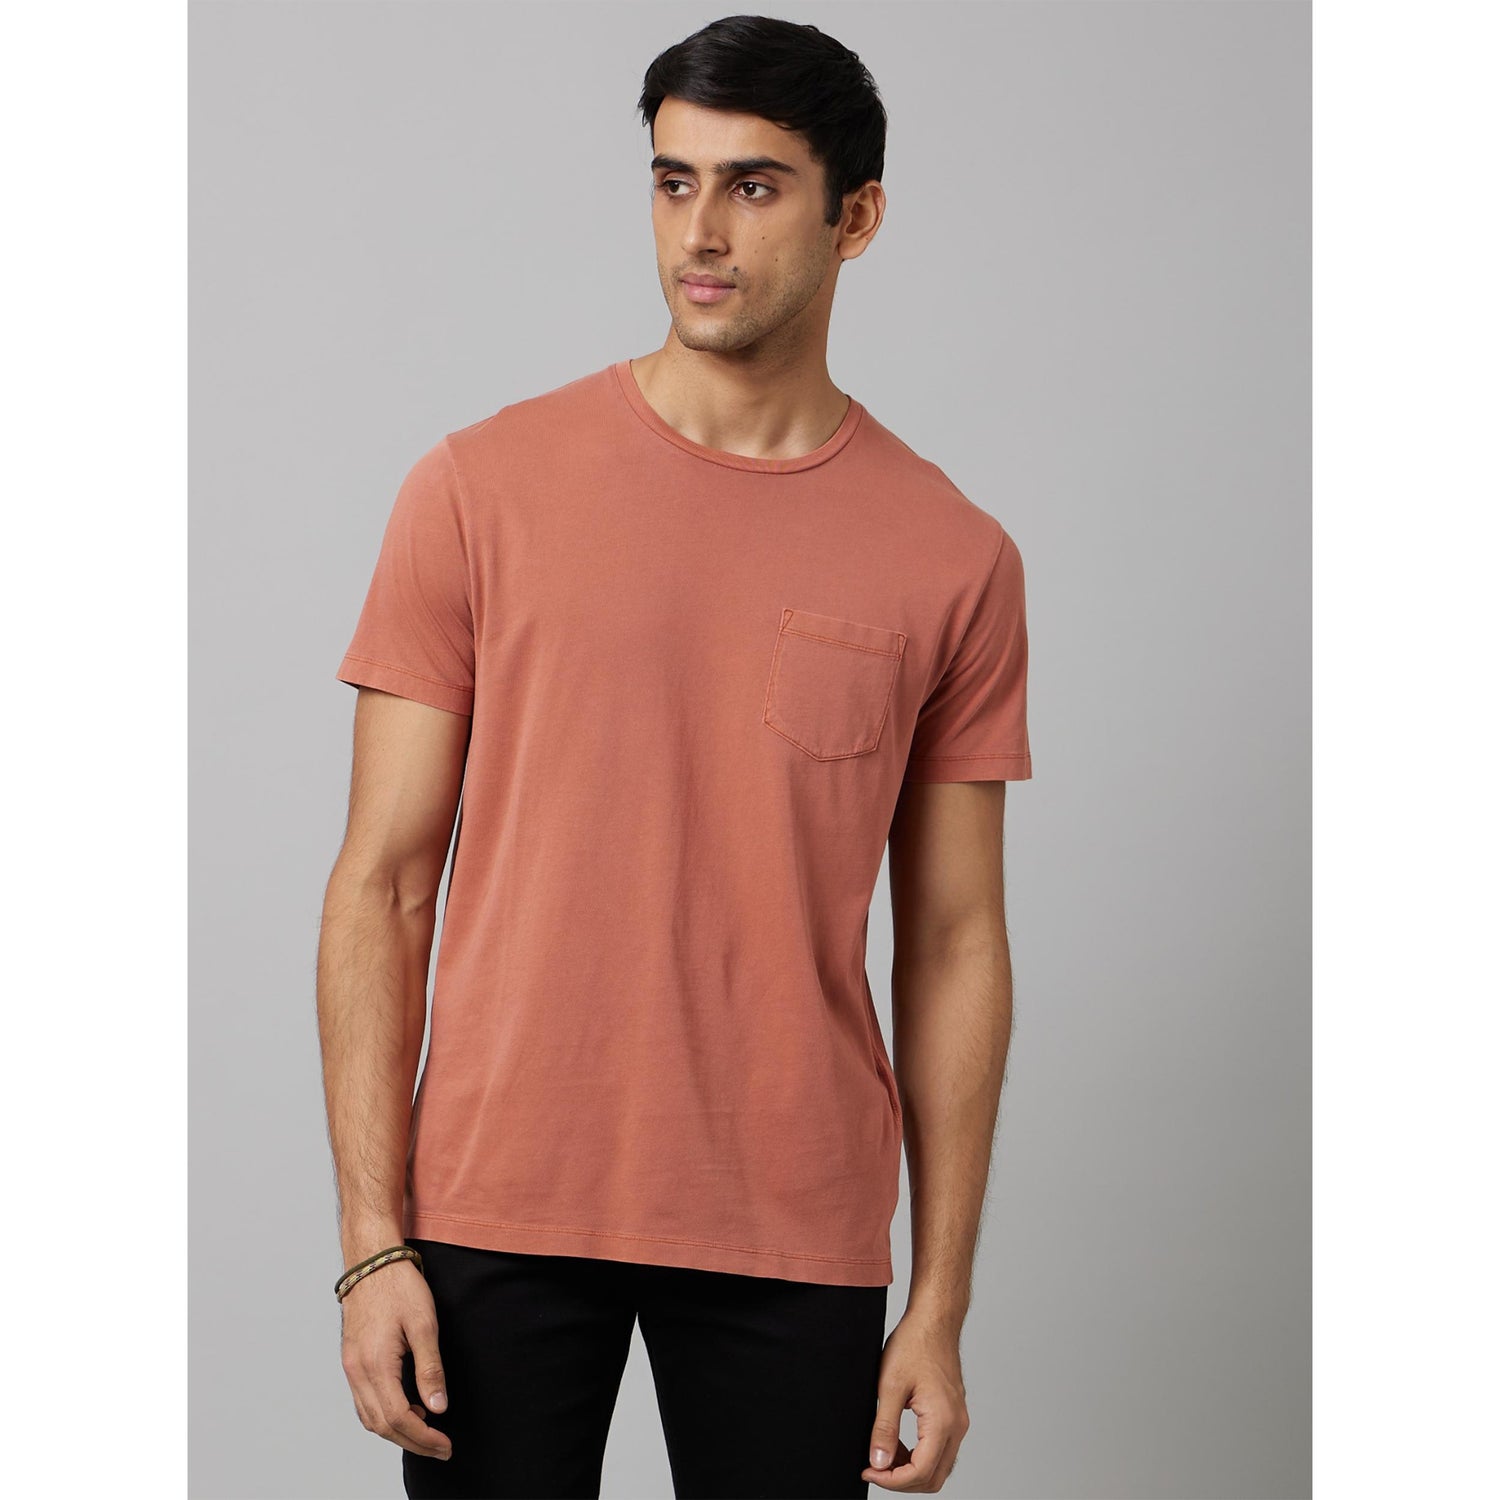 Sportswear Solid Rust Short Sleeves Round Neck Tshirt